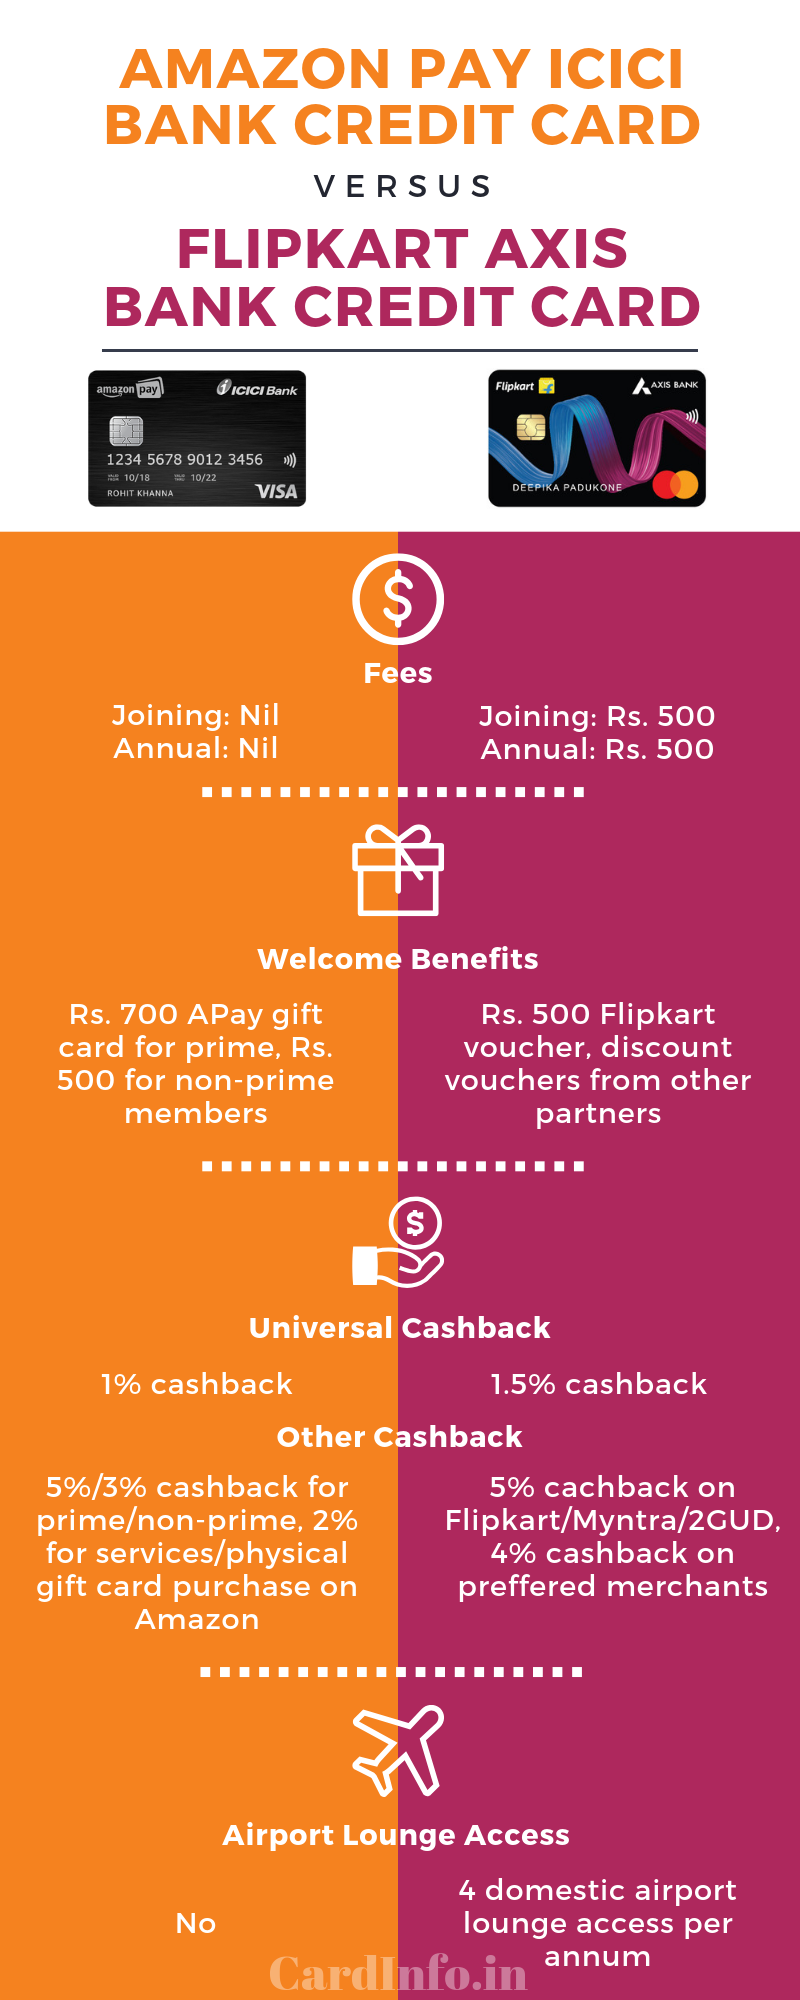 Amazon Pay ICICI Bank Credit Card vs Flipkart Axis Bank Credit Card | CardInfo